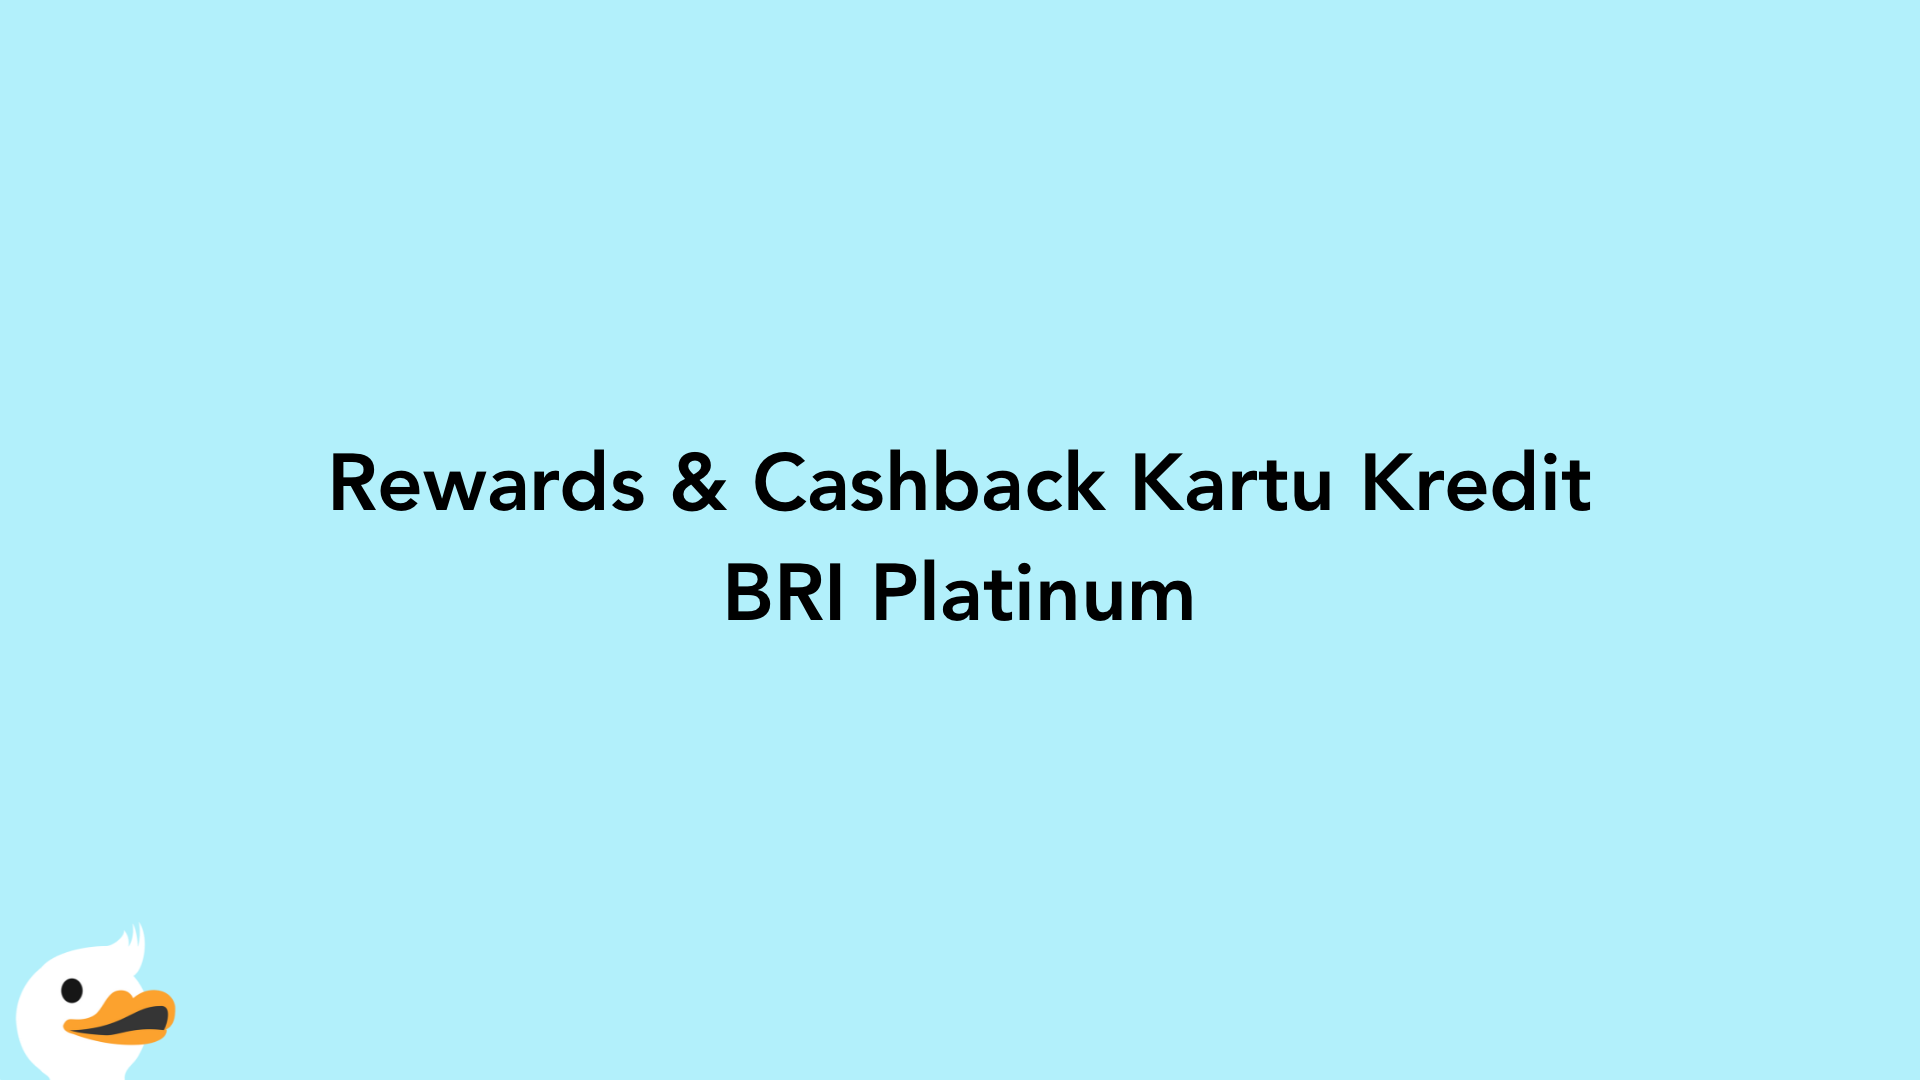 Rewards & Cashback Kartu Kredit BRI Platinum